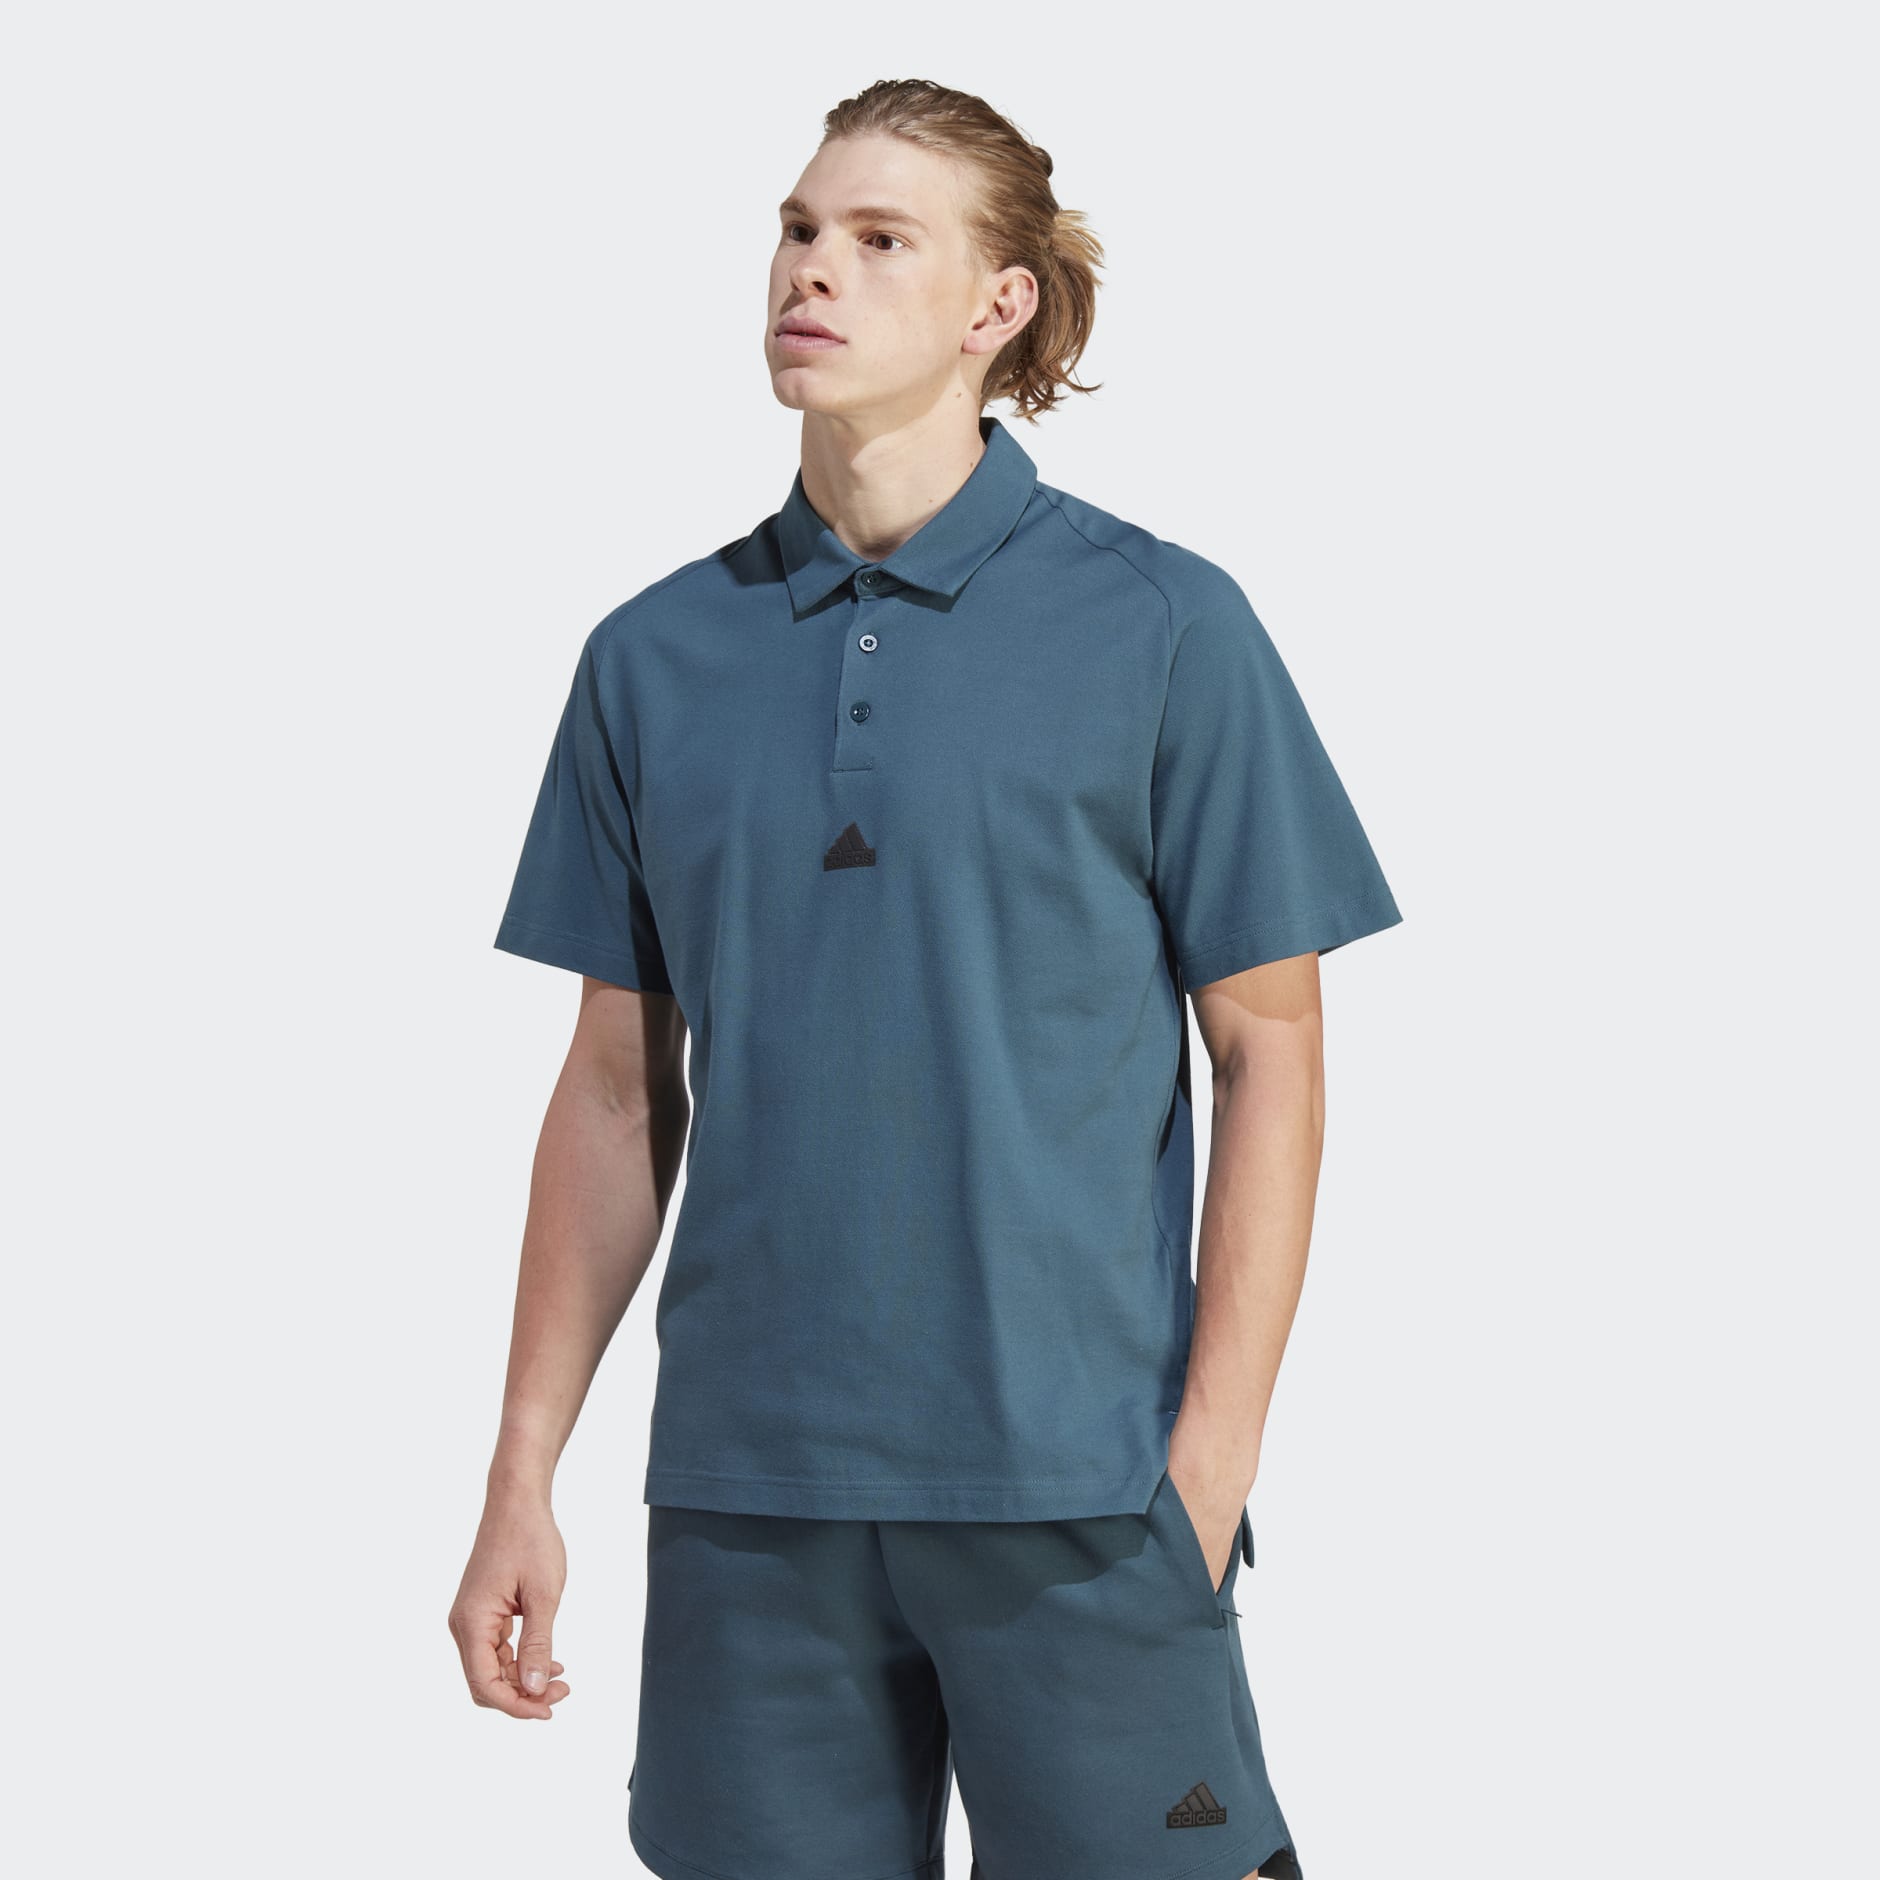 toevoegen Uitstekend overspringen Men's Clothing - adidas Z.N.E. Premium Polo Shirt - Turquoise | adidas Oman